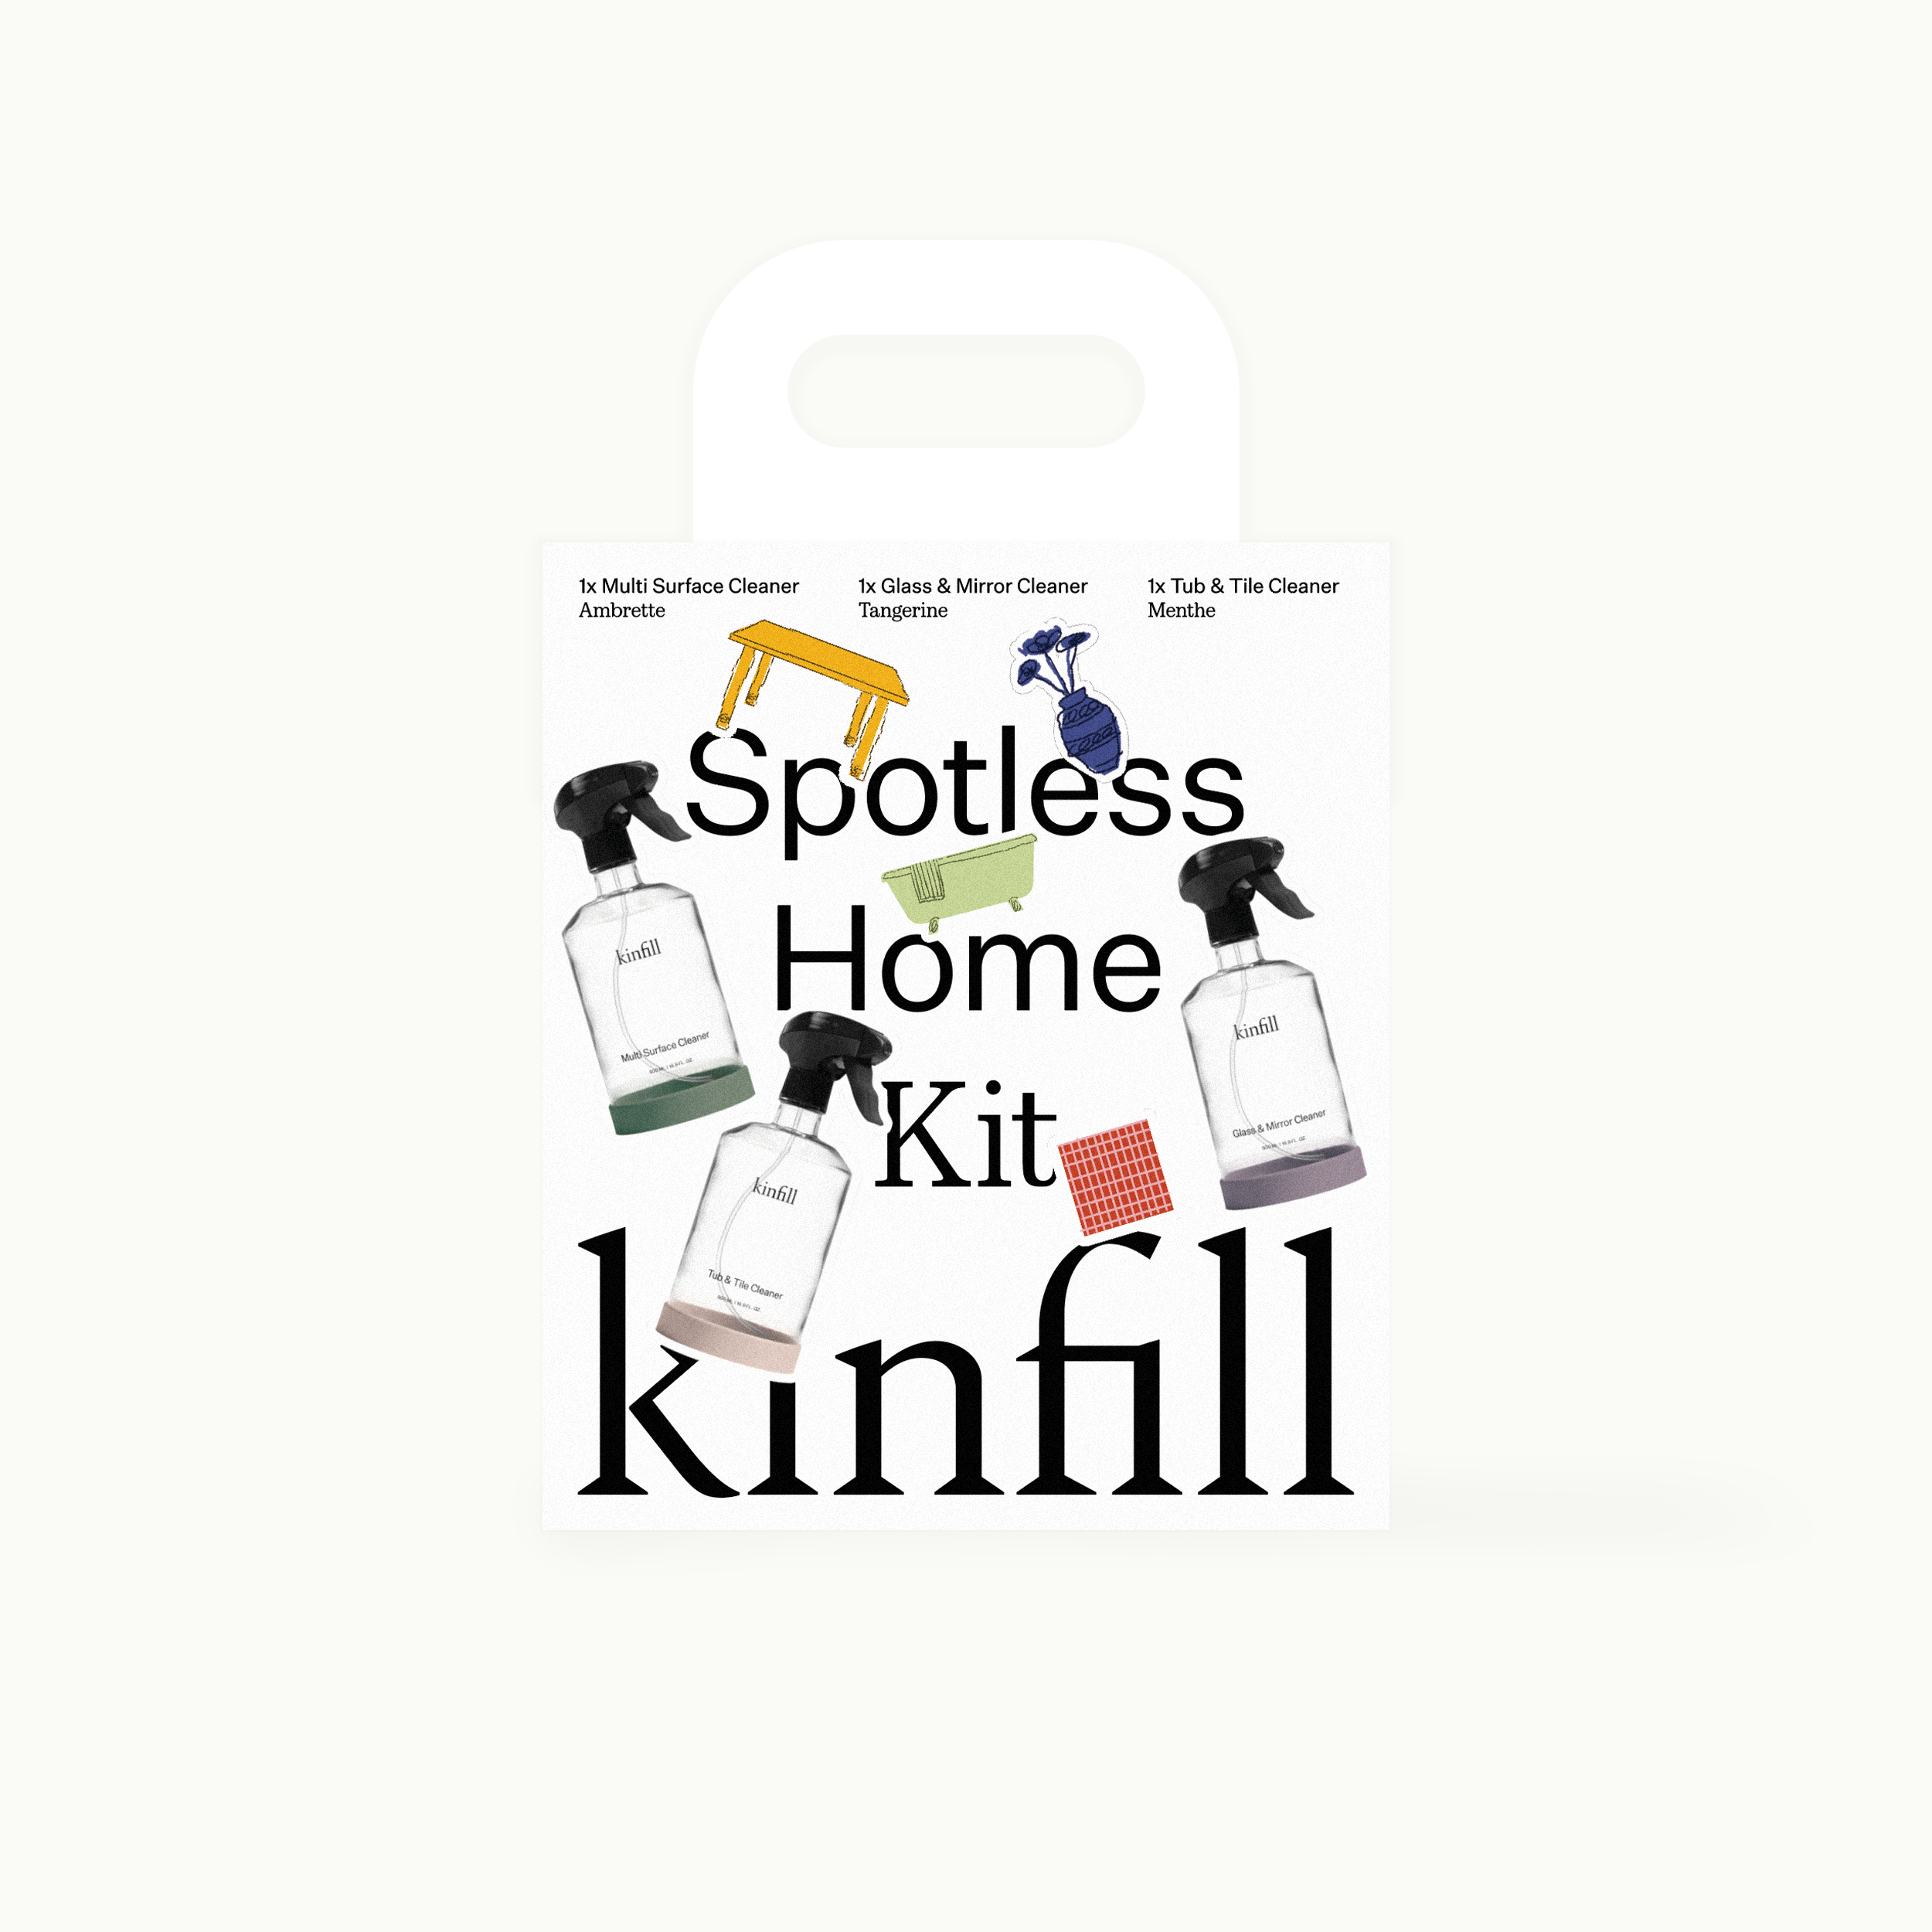 Spotless_Home_Kit_E-com_1.png